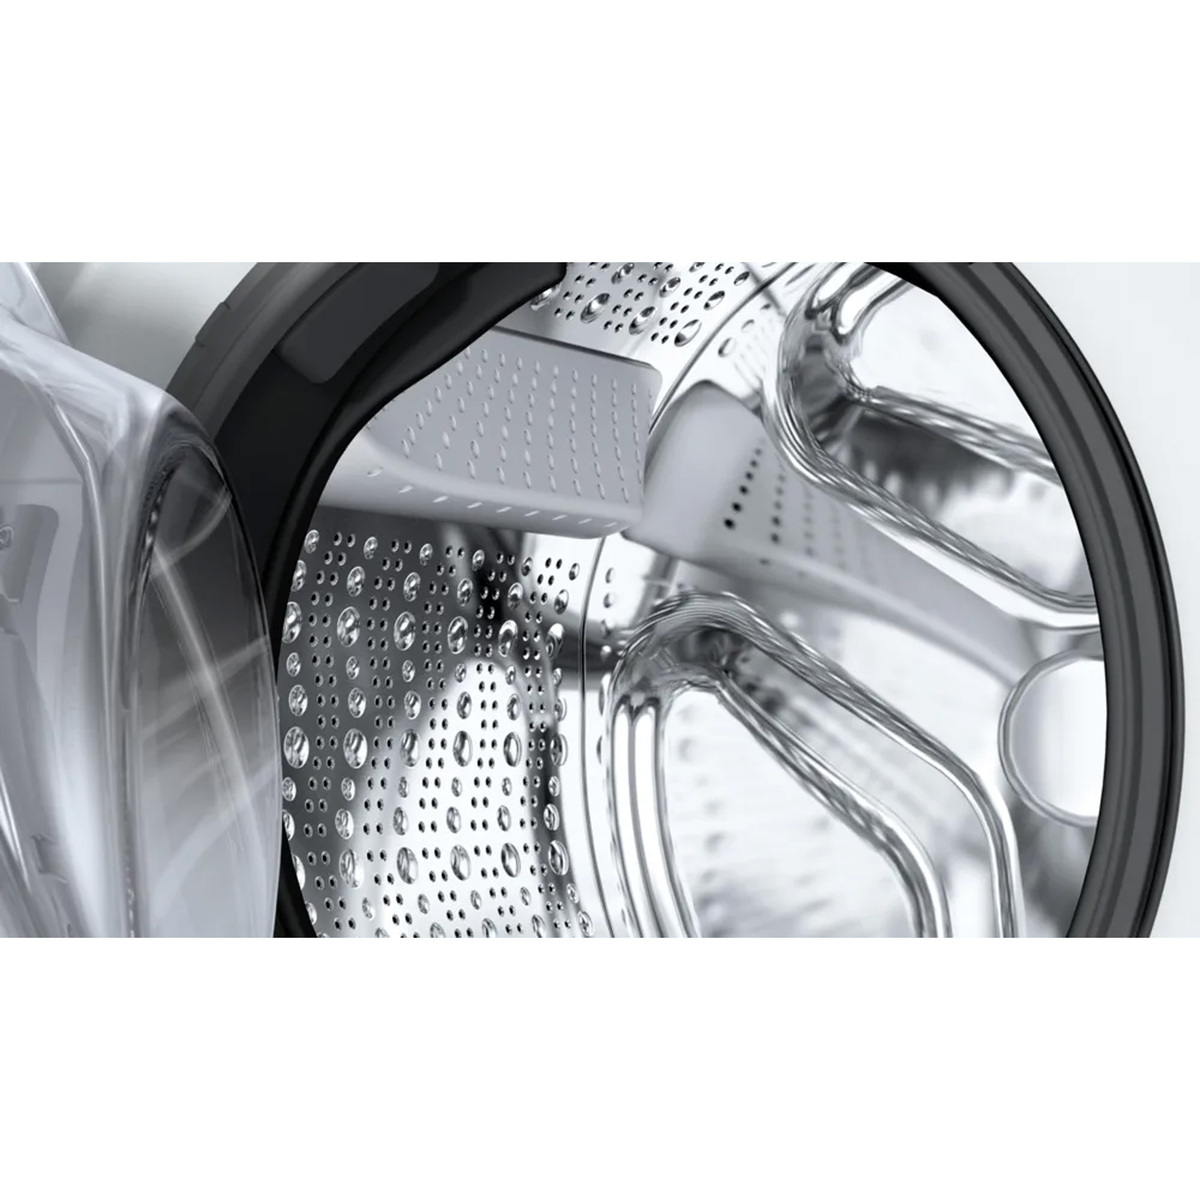 Bosch Series 6 Front Load Washing Machine, 9 kg, 1400 RPM, White, WGA244A0GC